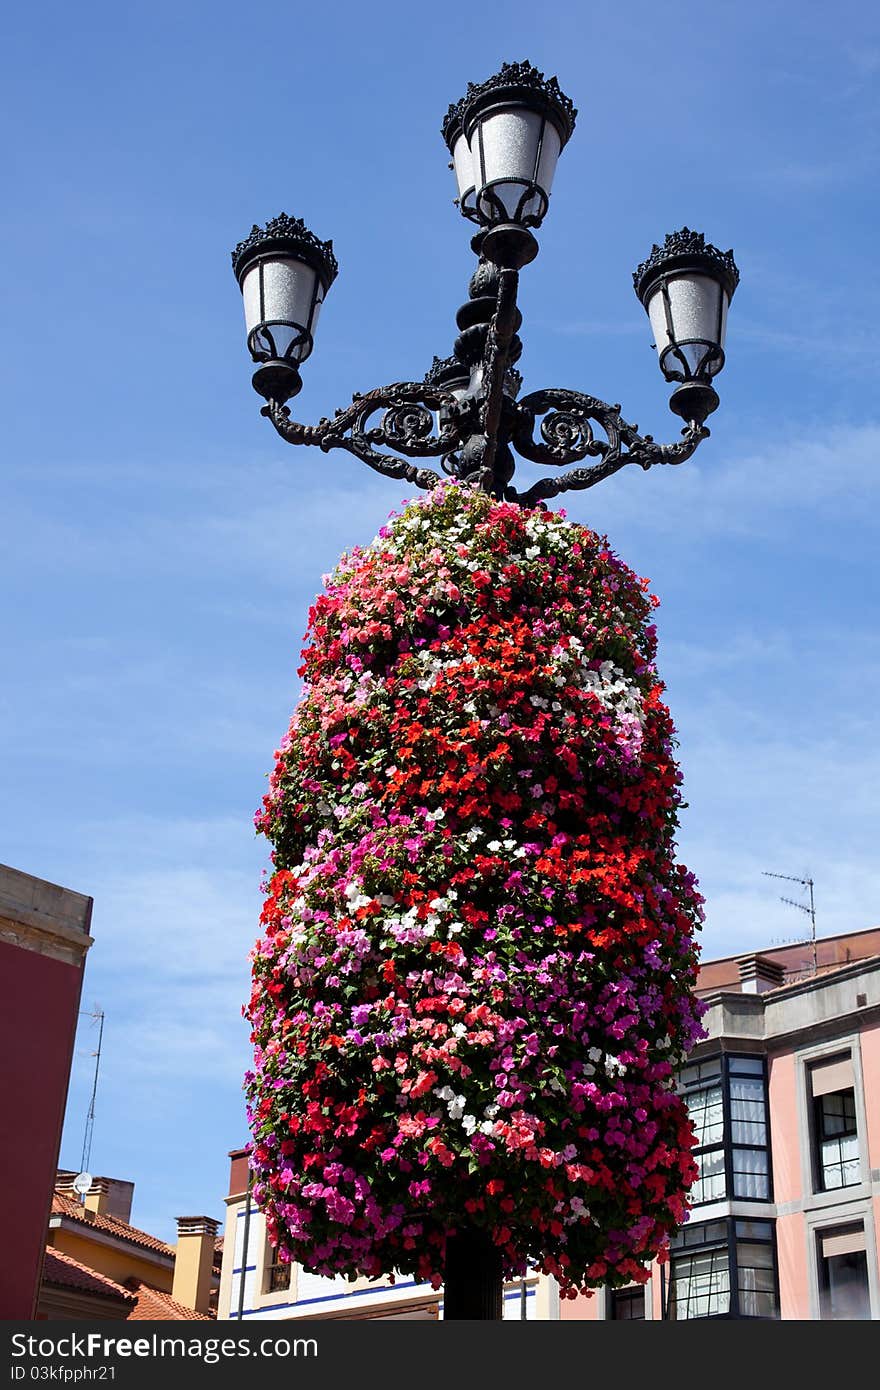 Flower decoration on a street light in Gijon, Asturias